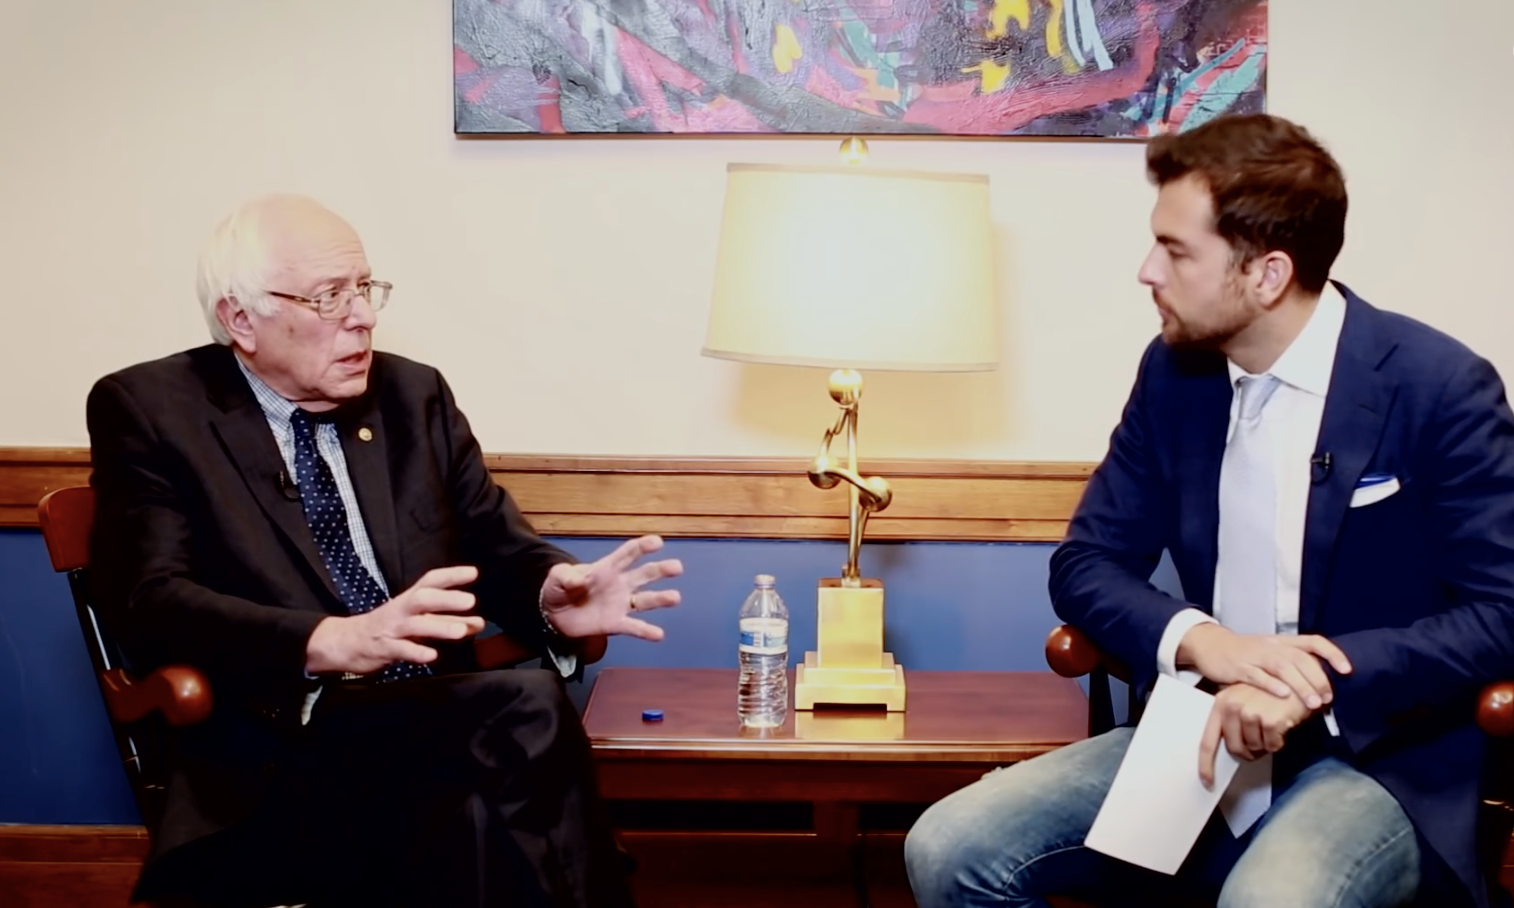 Interview with Bernie Sanders